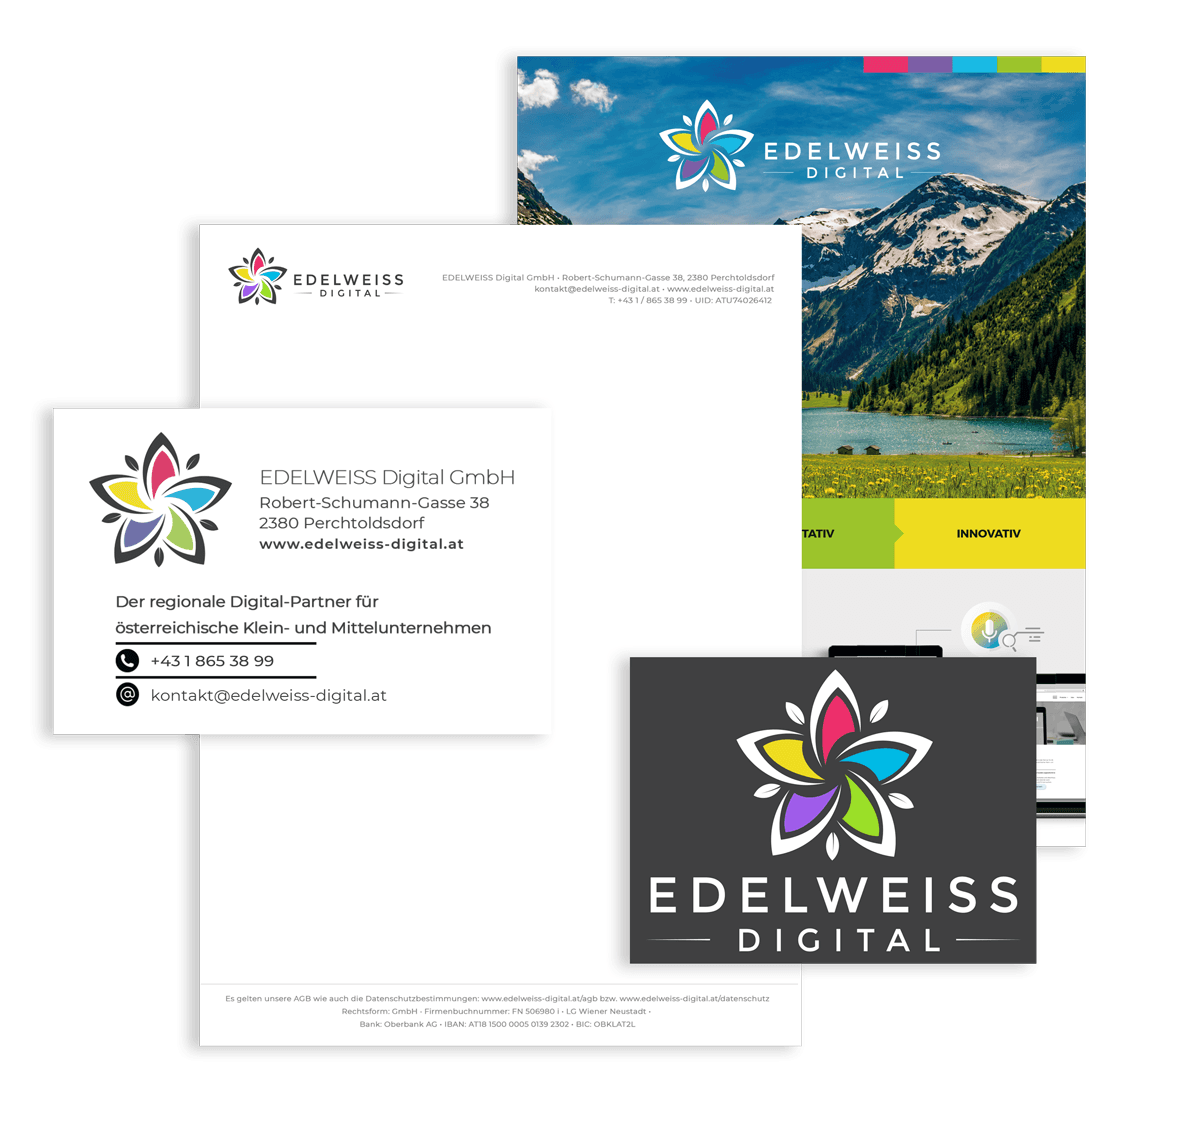 EDELWEISS Digital Corporate Design